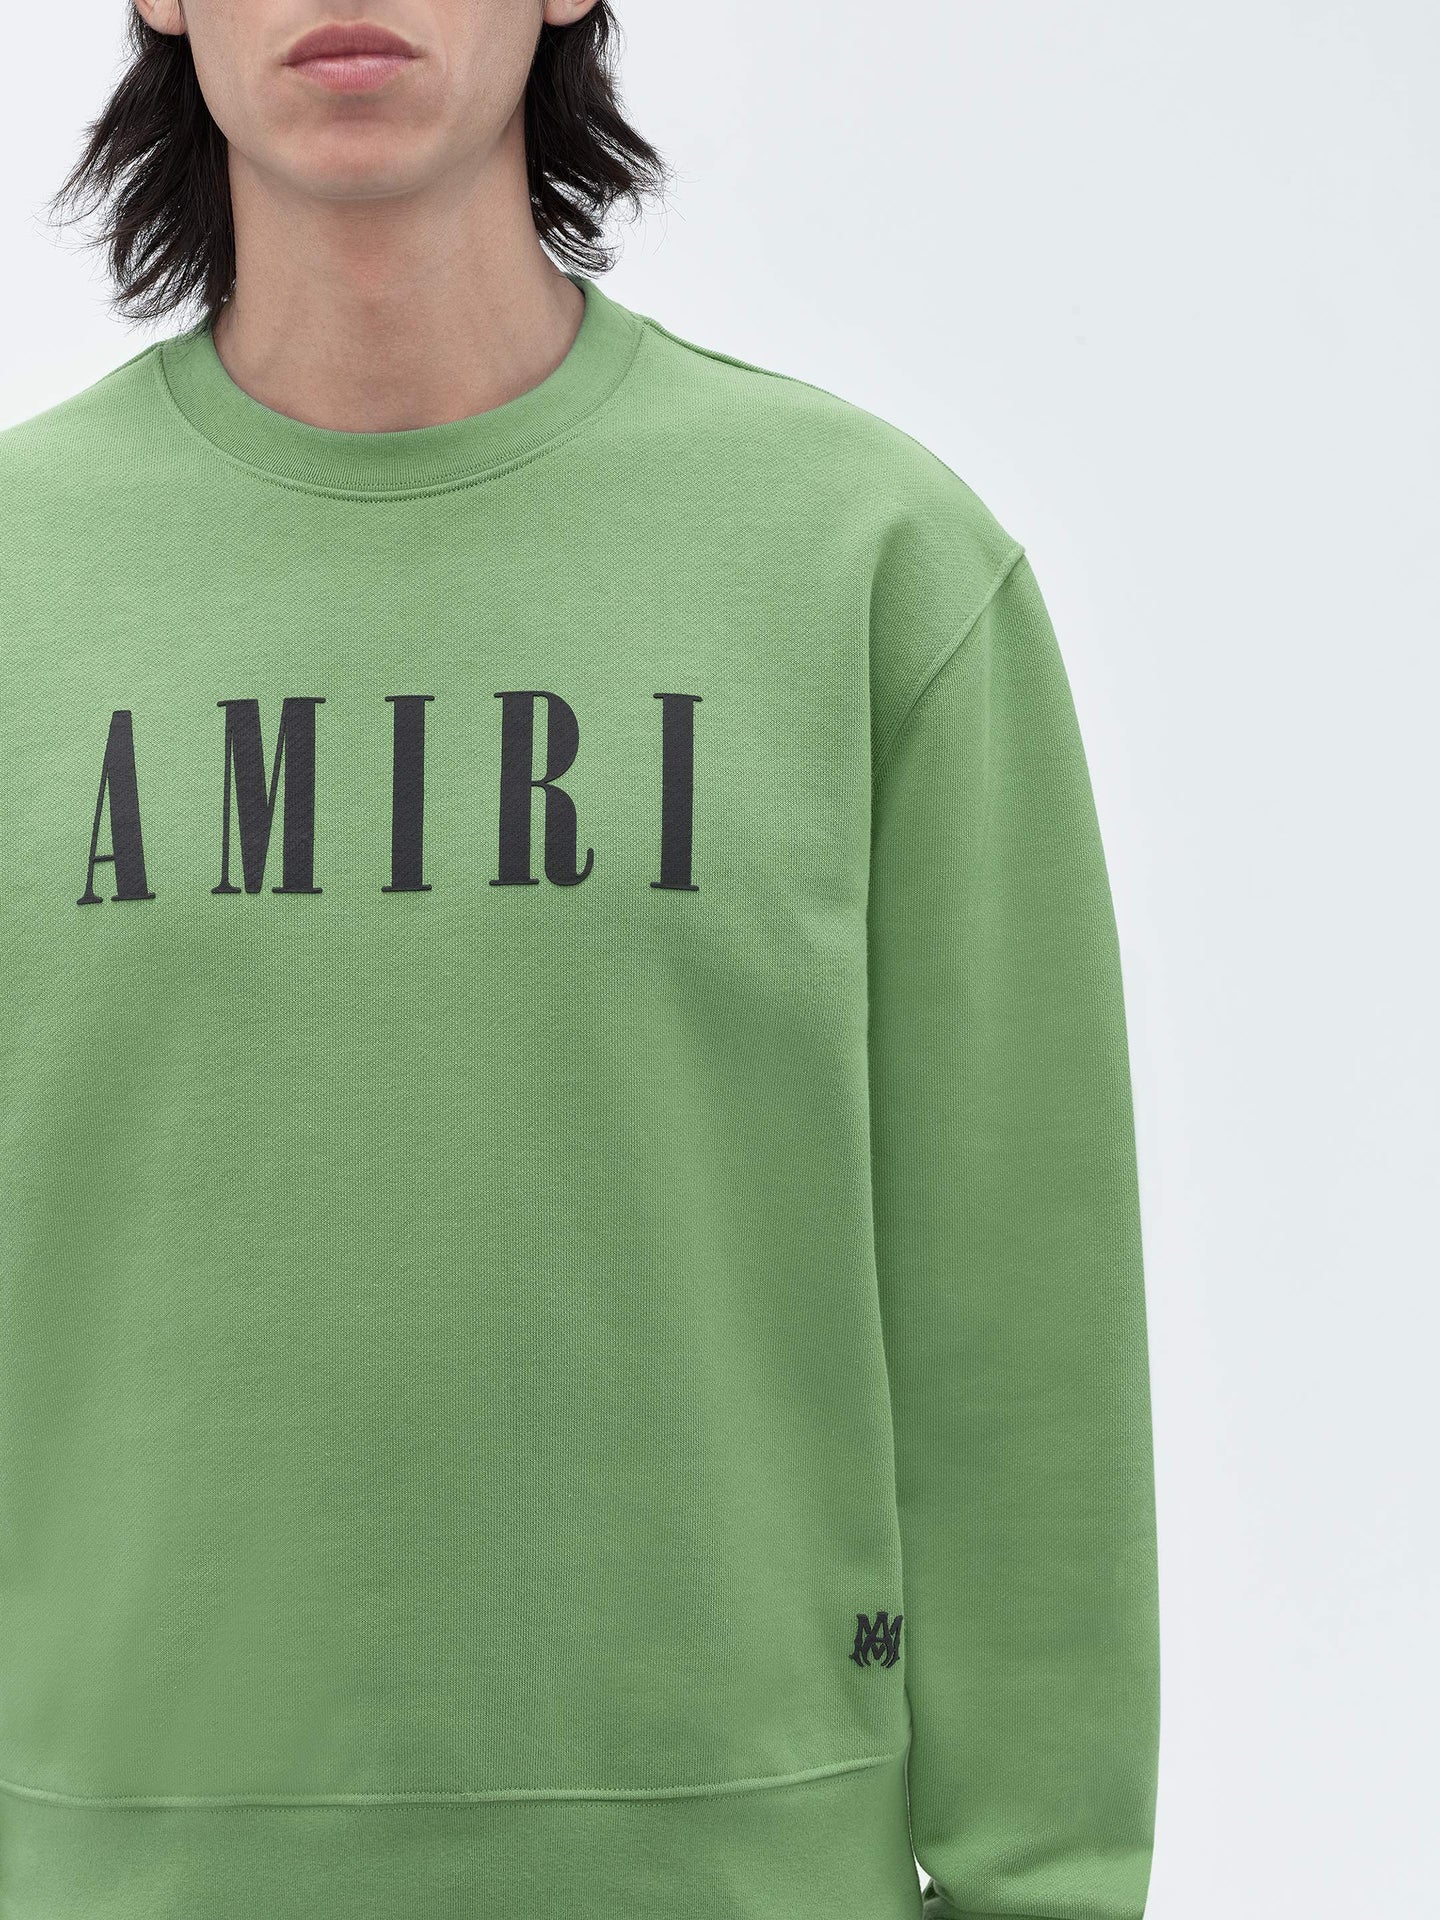 AMIRI CORE LOGO CREW - Mineral Green